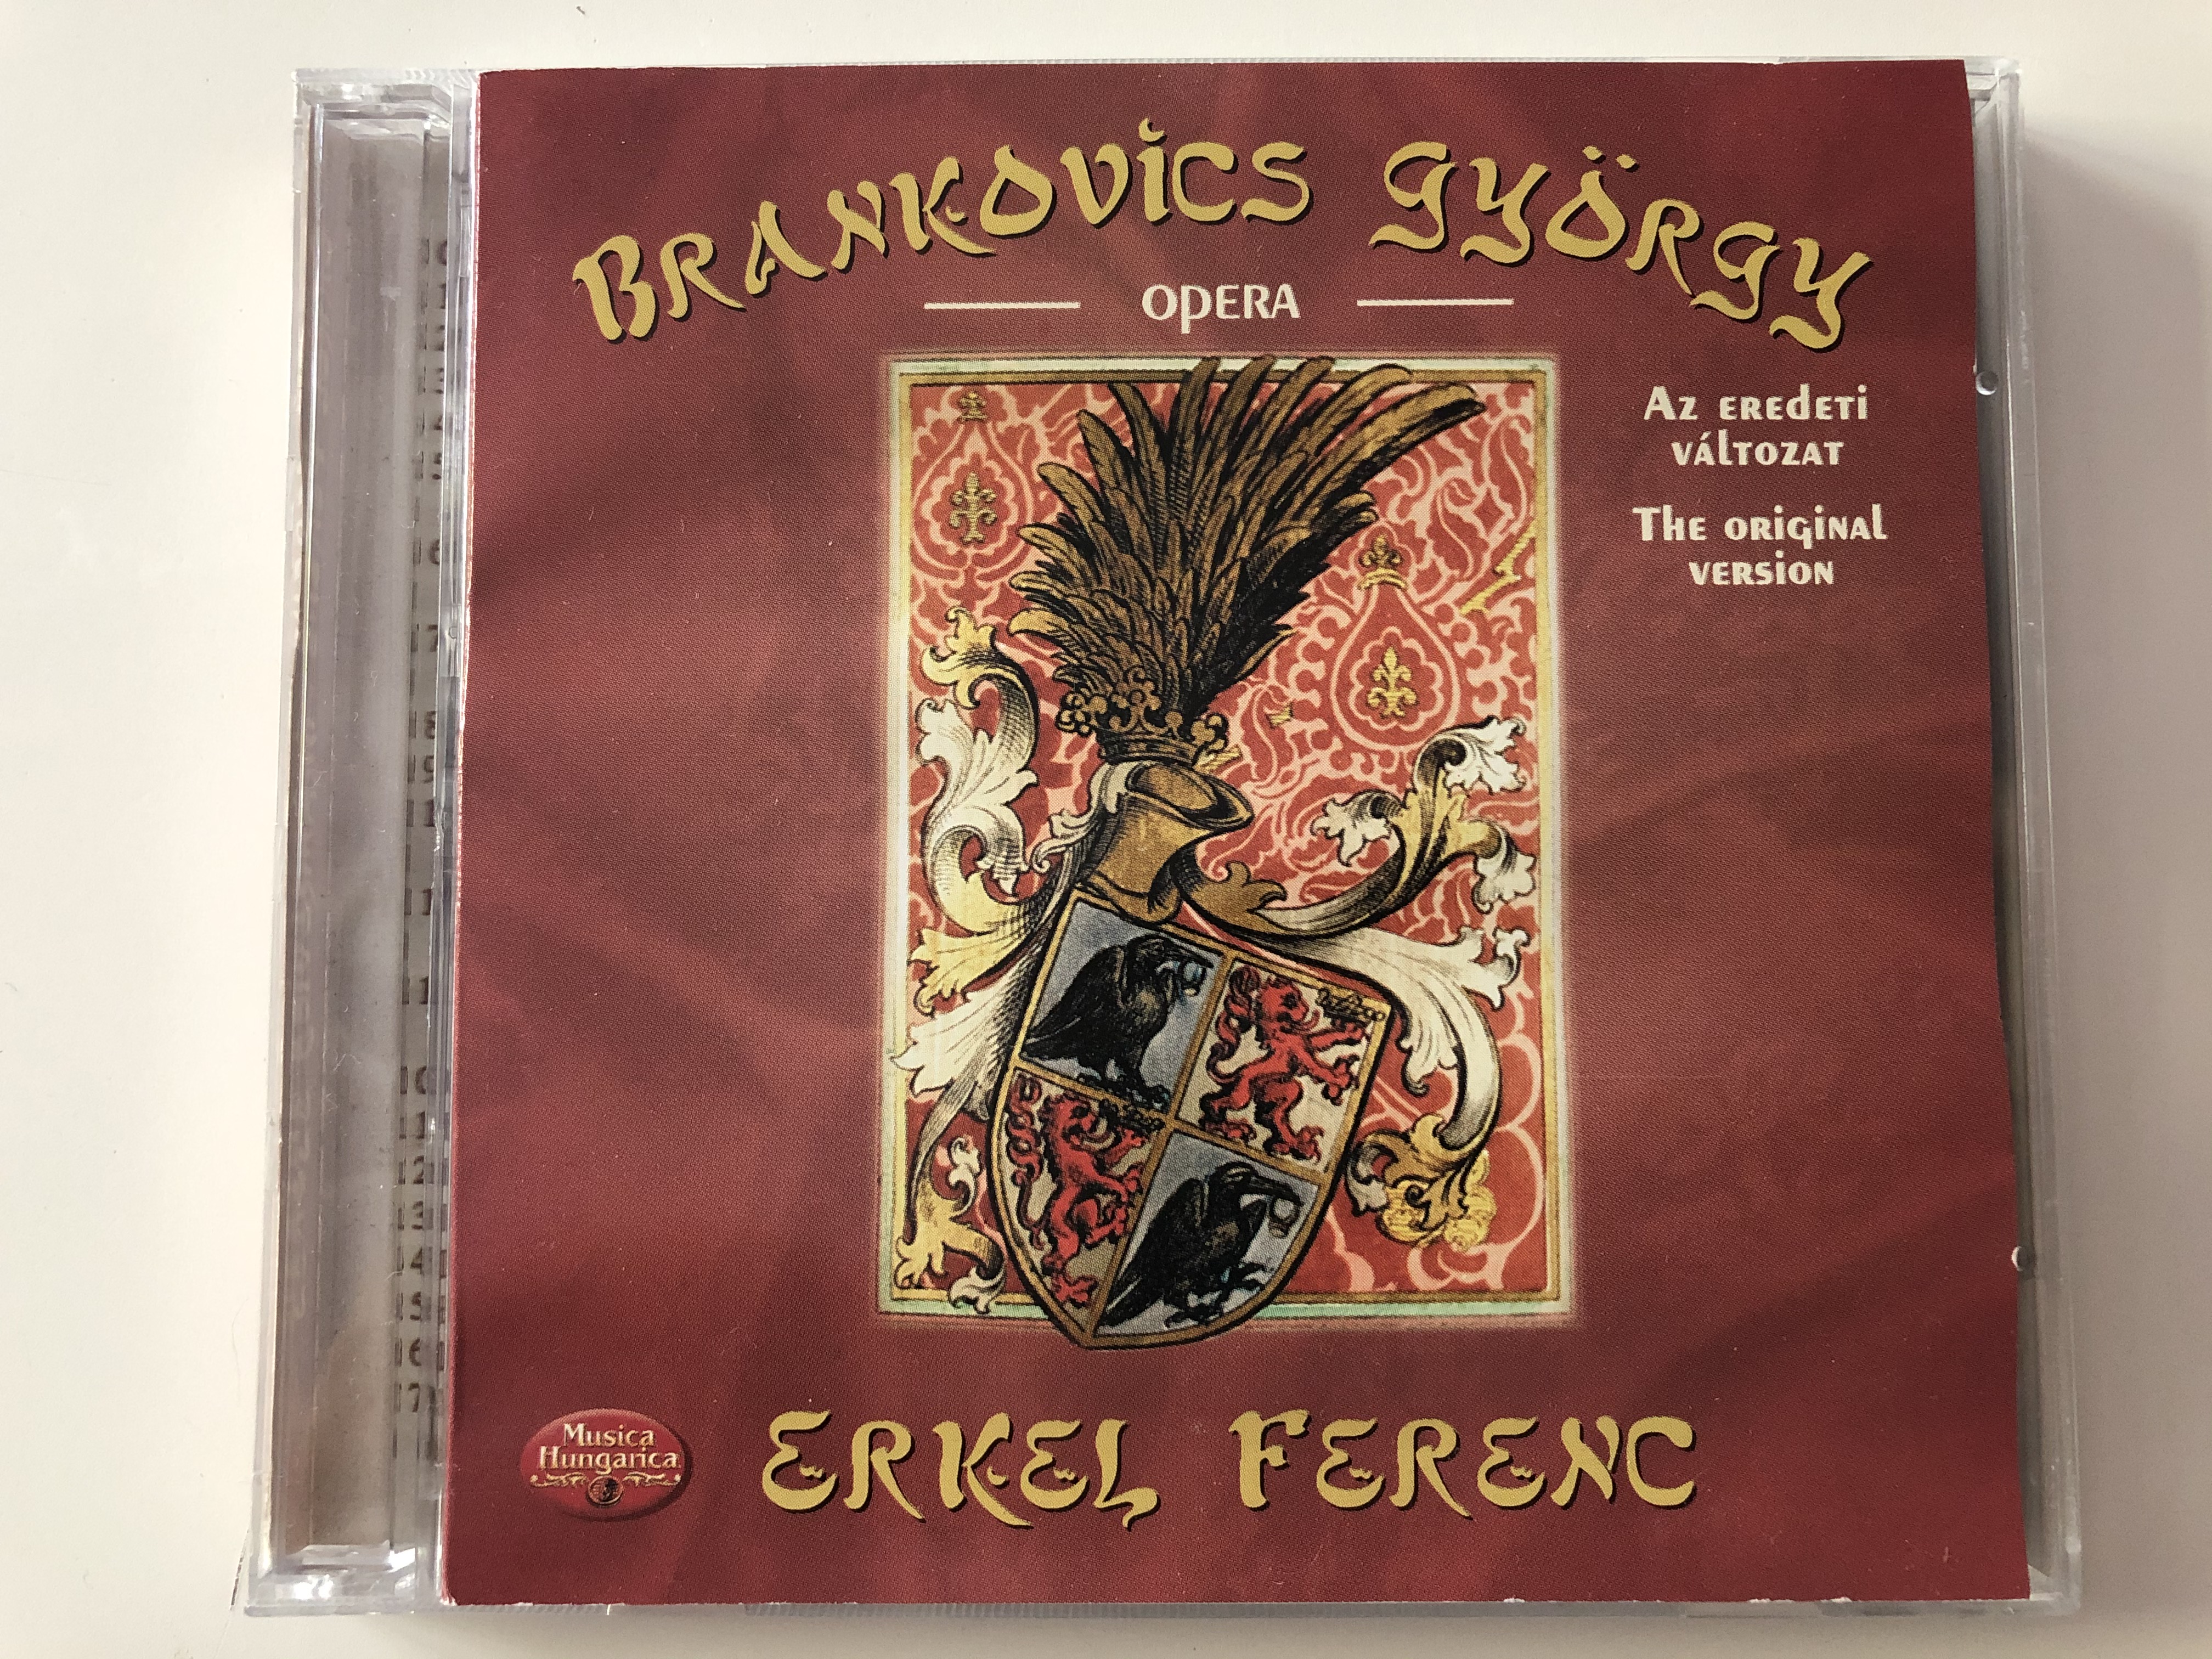 brankovics-gyorgy-opera-az-eredeti-valtozat-the-original-version-erkel-ferenc-musica-hungarica-ltd.-2x-audio-cd-2003-stereo-mha-232-1-.jpg